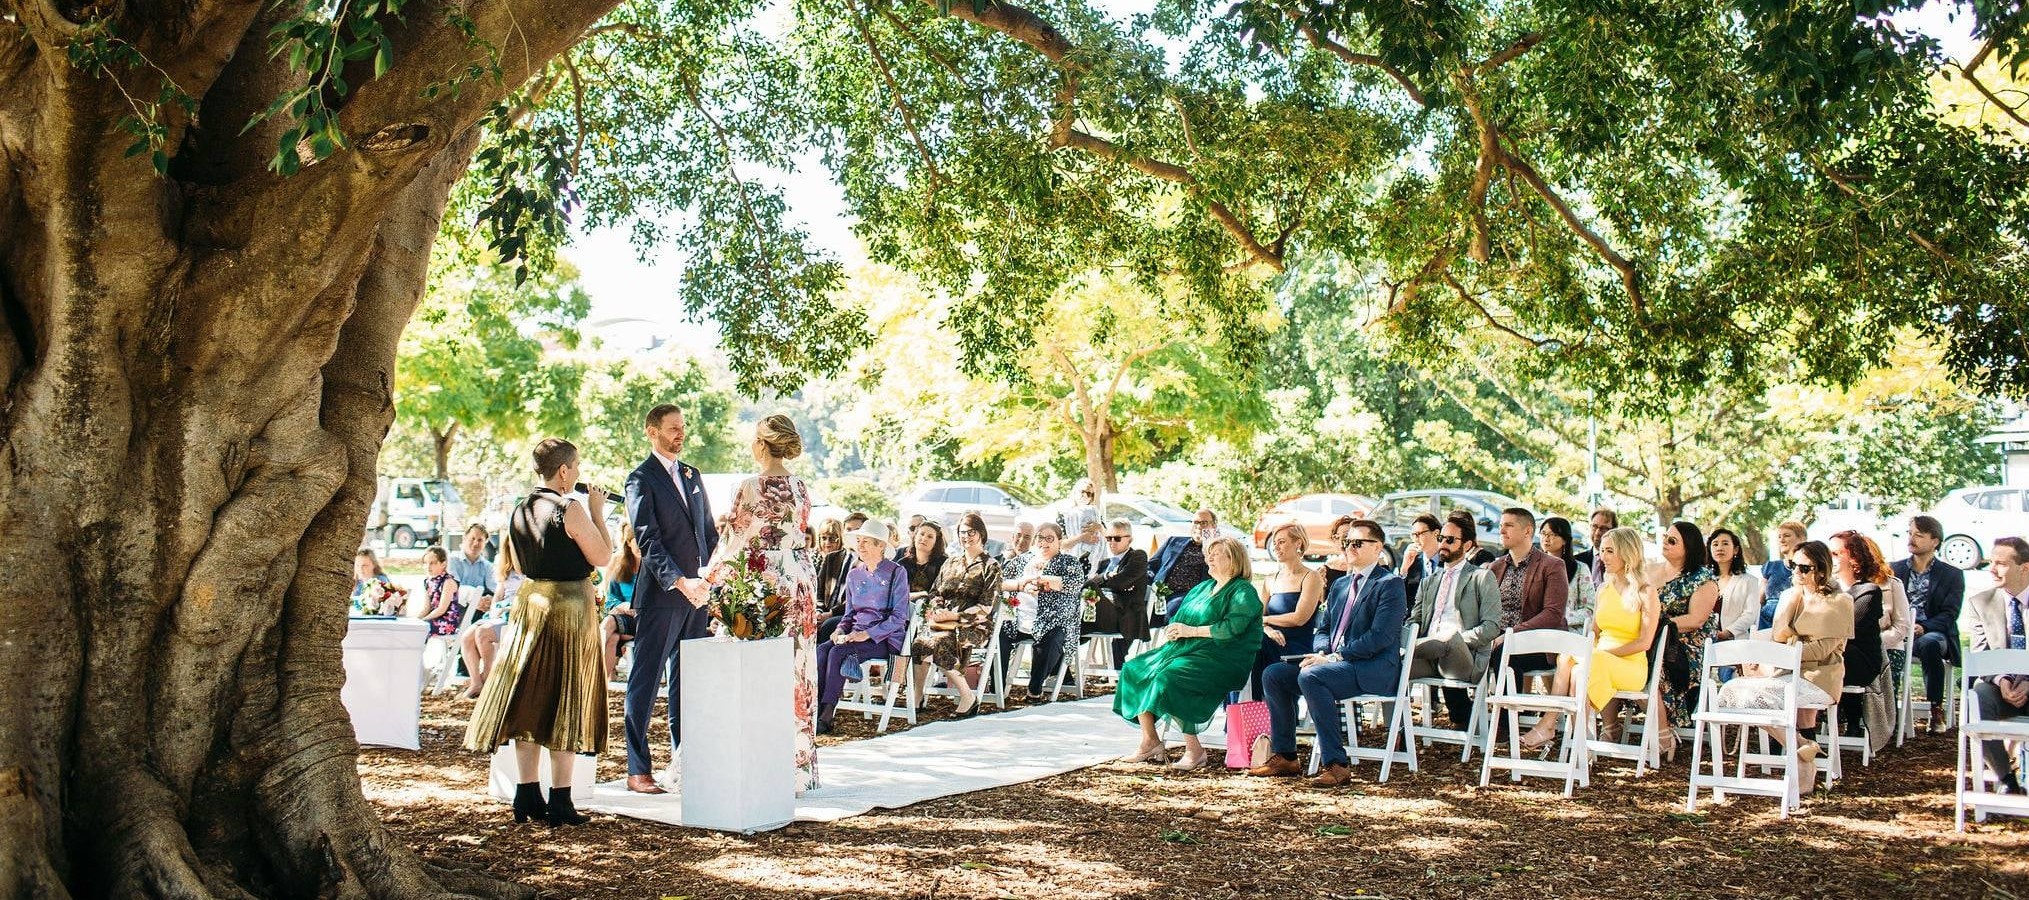 Brisbane Wedding Ceremony Locations With Love Brisbane Wedding Decorators